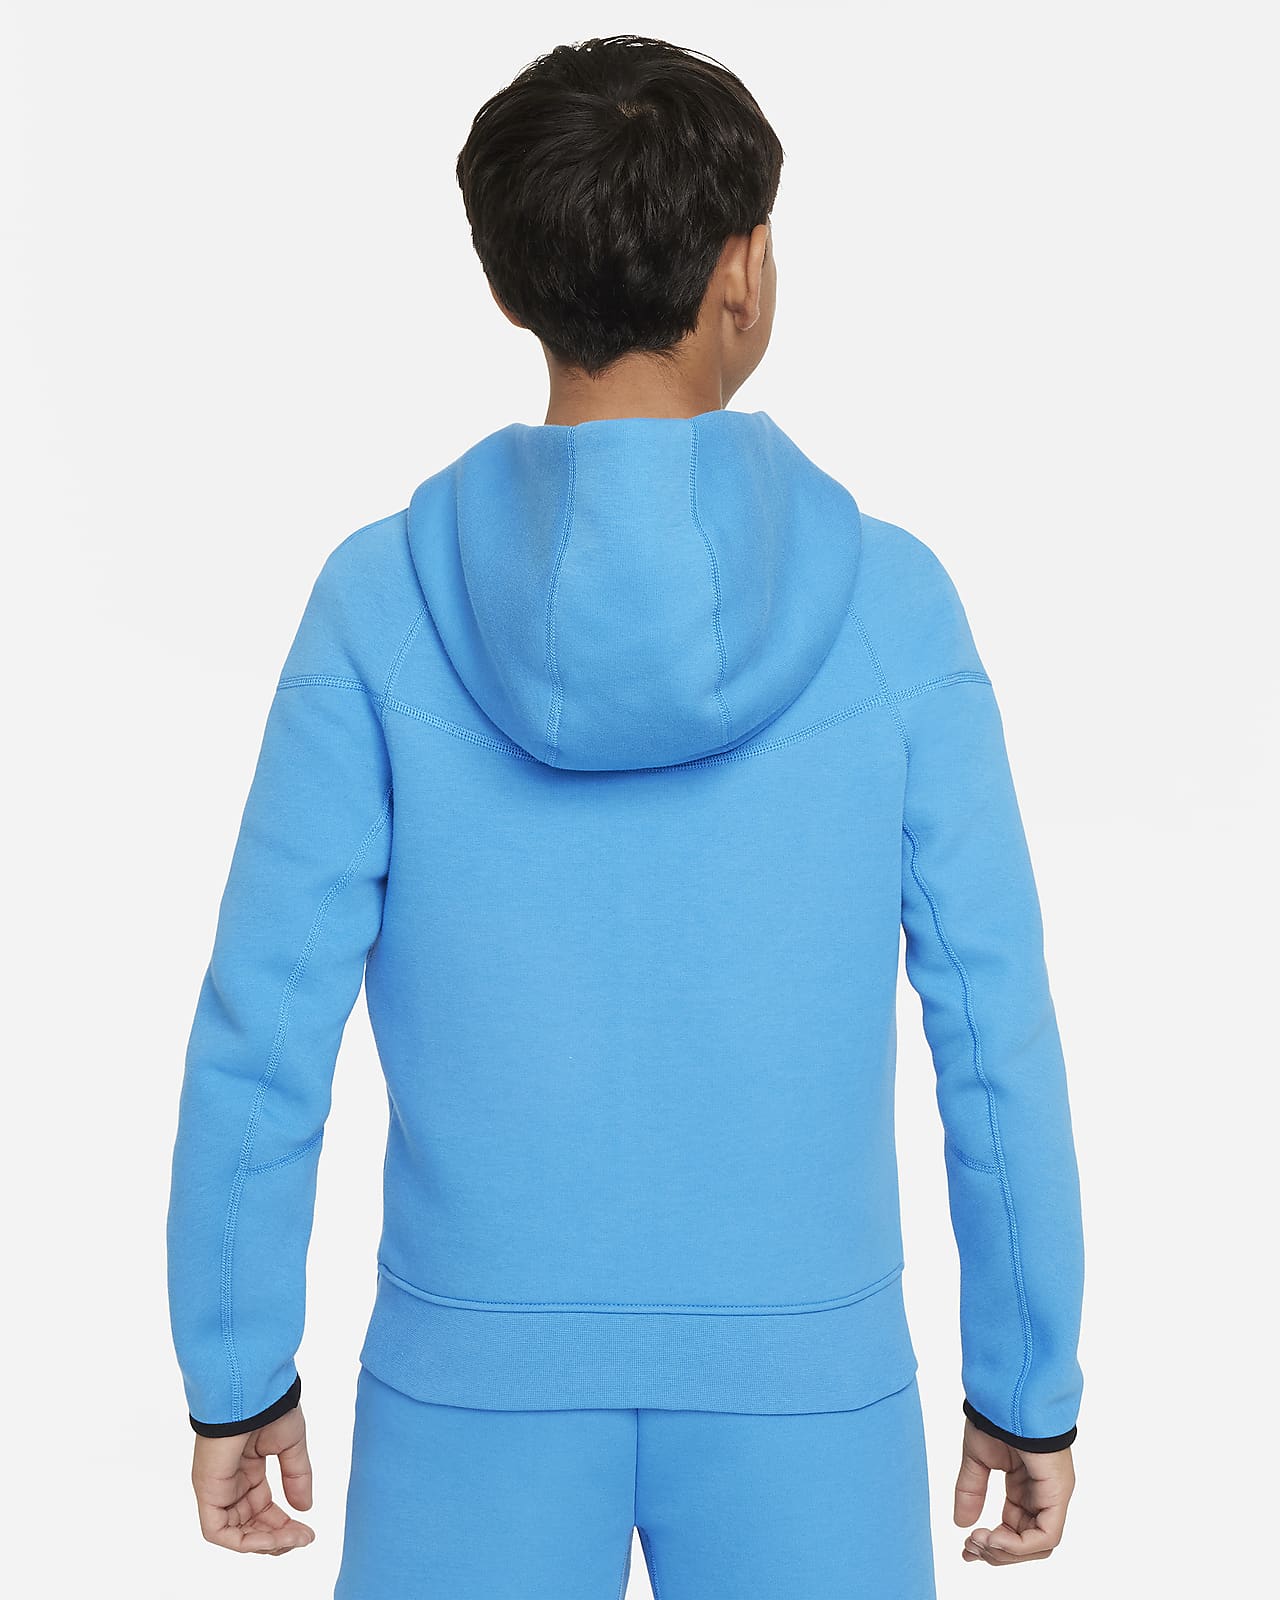 $25 NWT ☀TEK GEAR☀ Hoodie FULL ZIP Jacket Sz S 8 BLUE New Boys